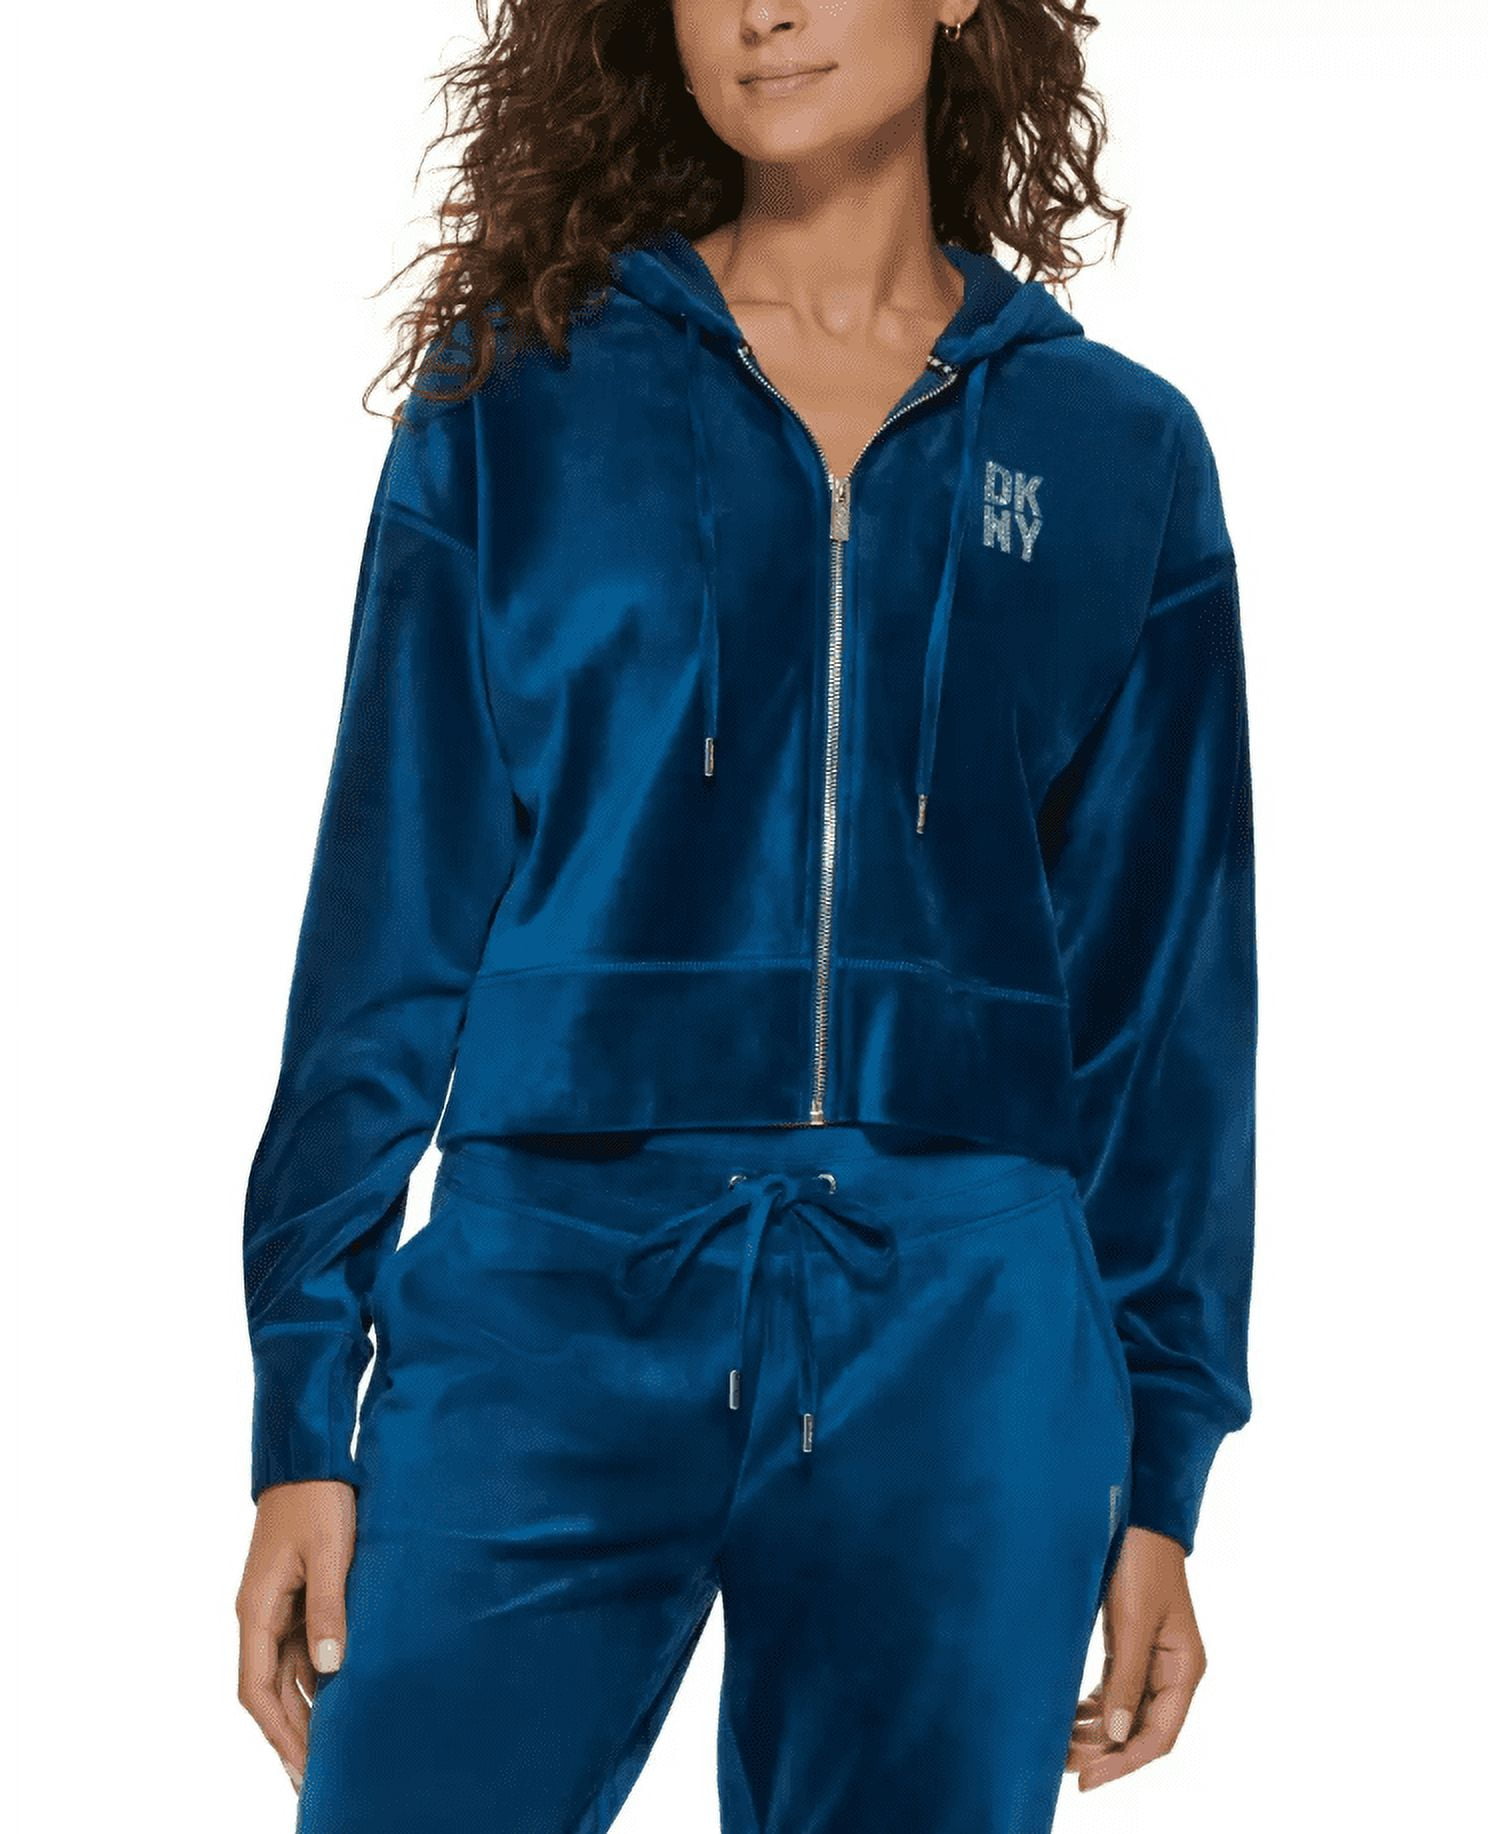 Dkny Sport Women's Velour with rhinestones Logo Zip-Up Hoodie, Blue, Large